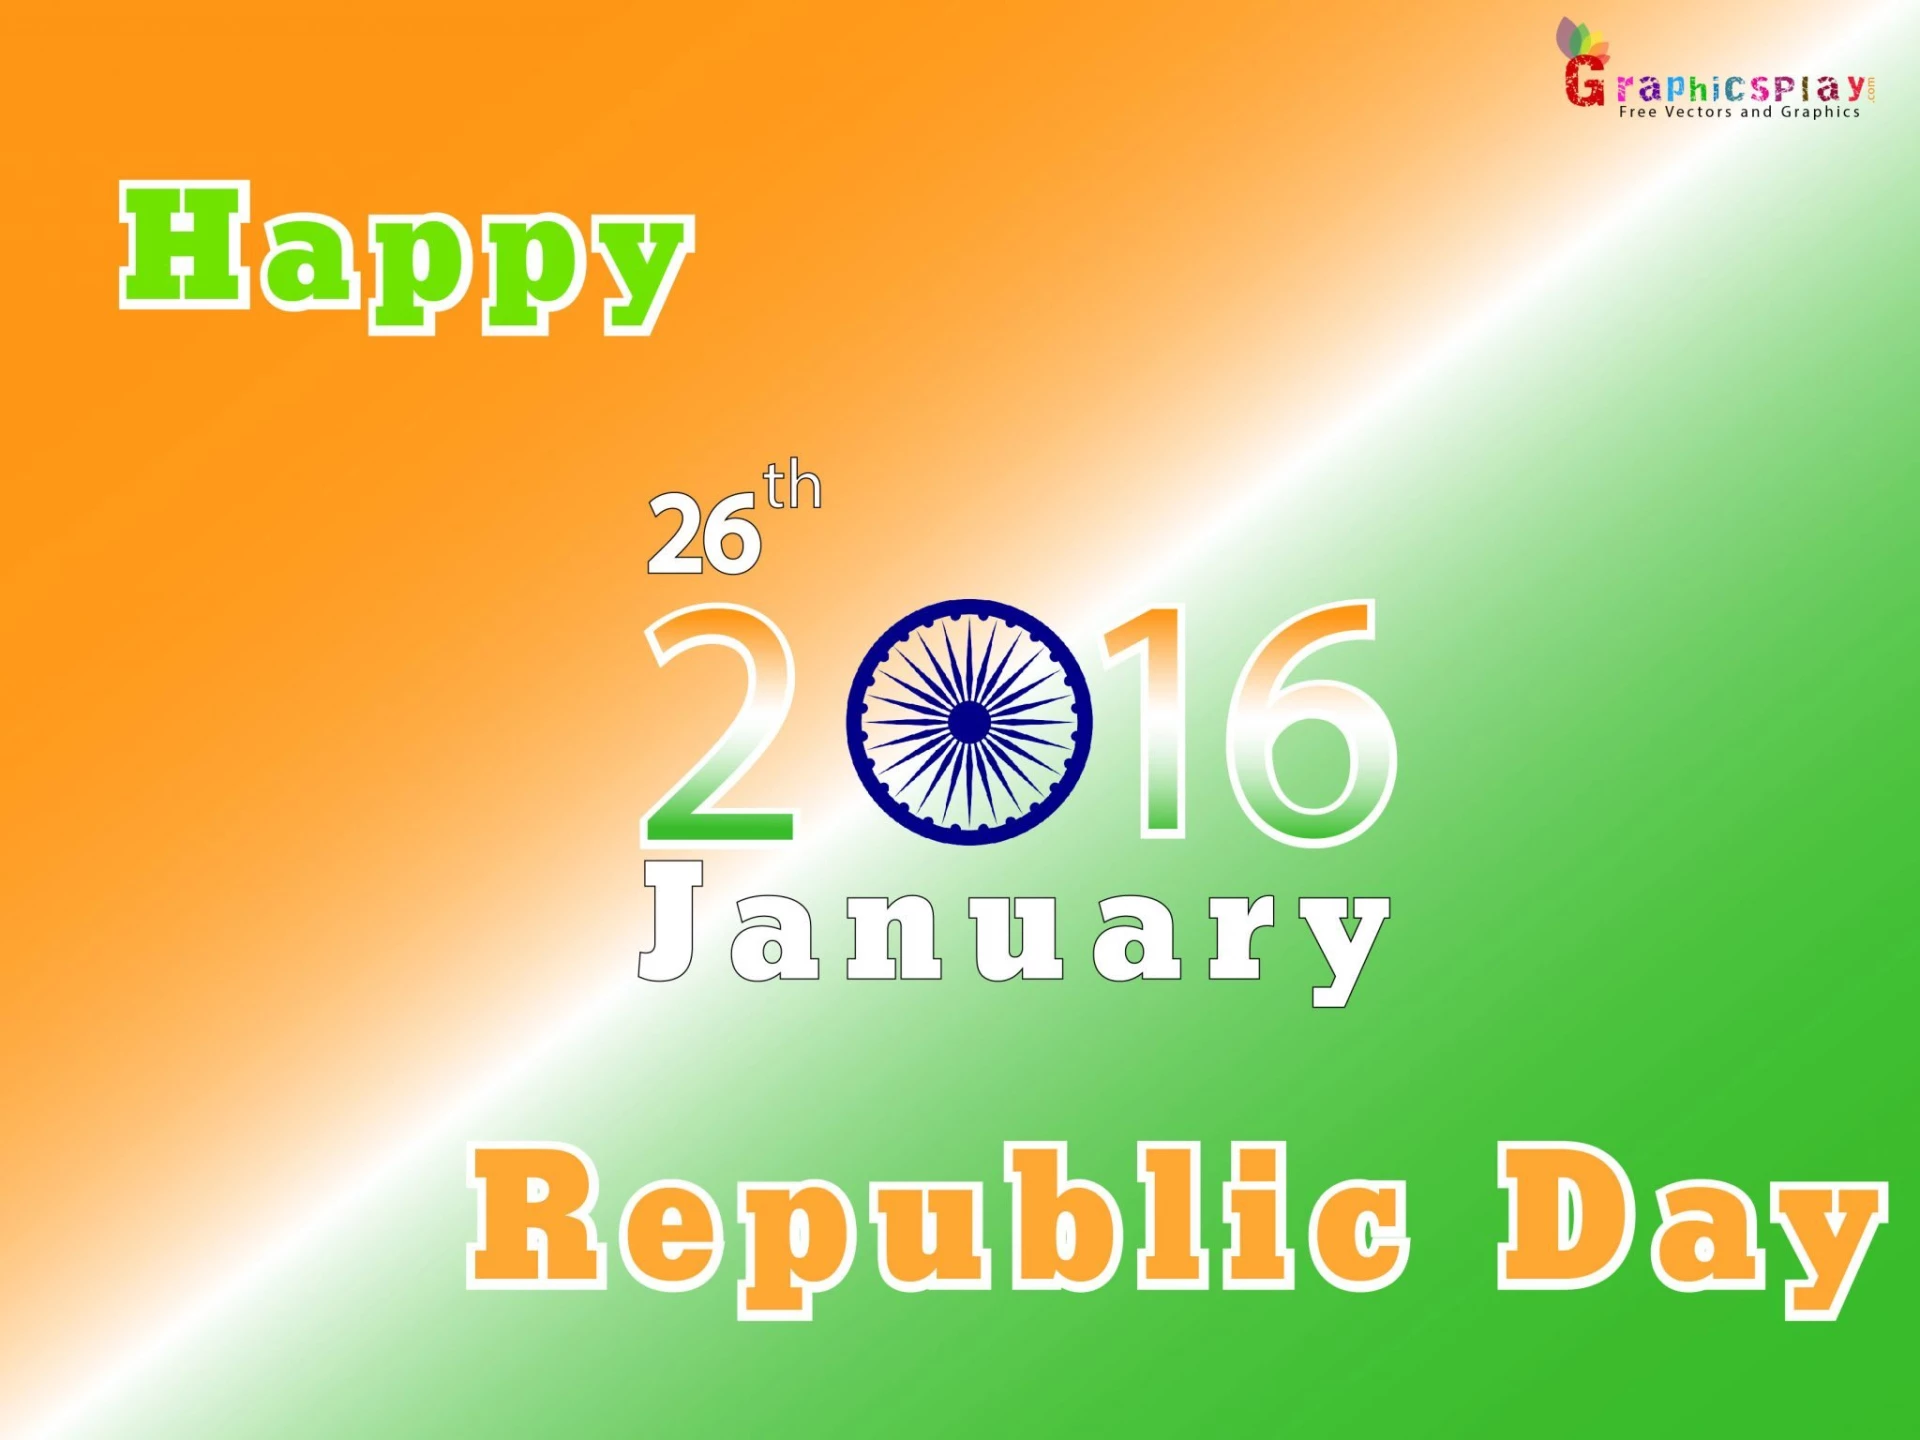 Indian Republic Day Greeting 1